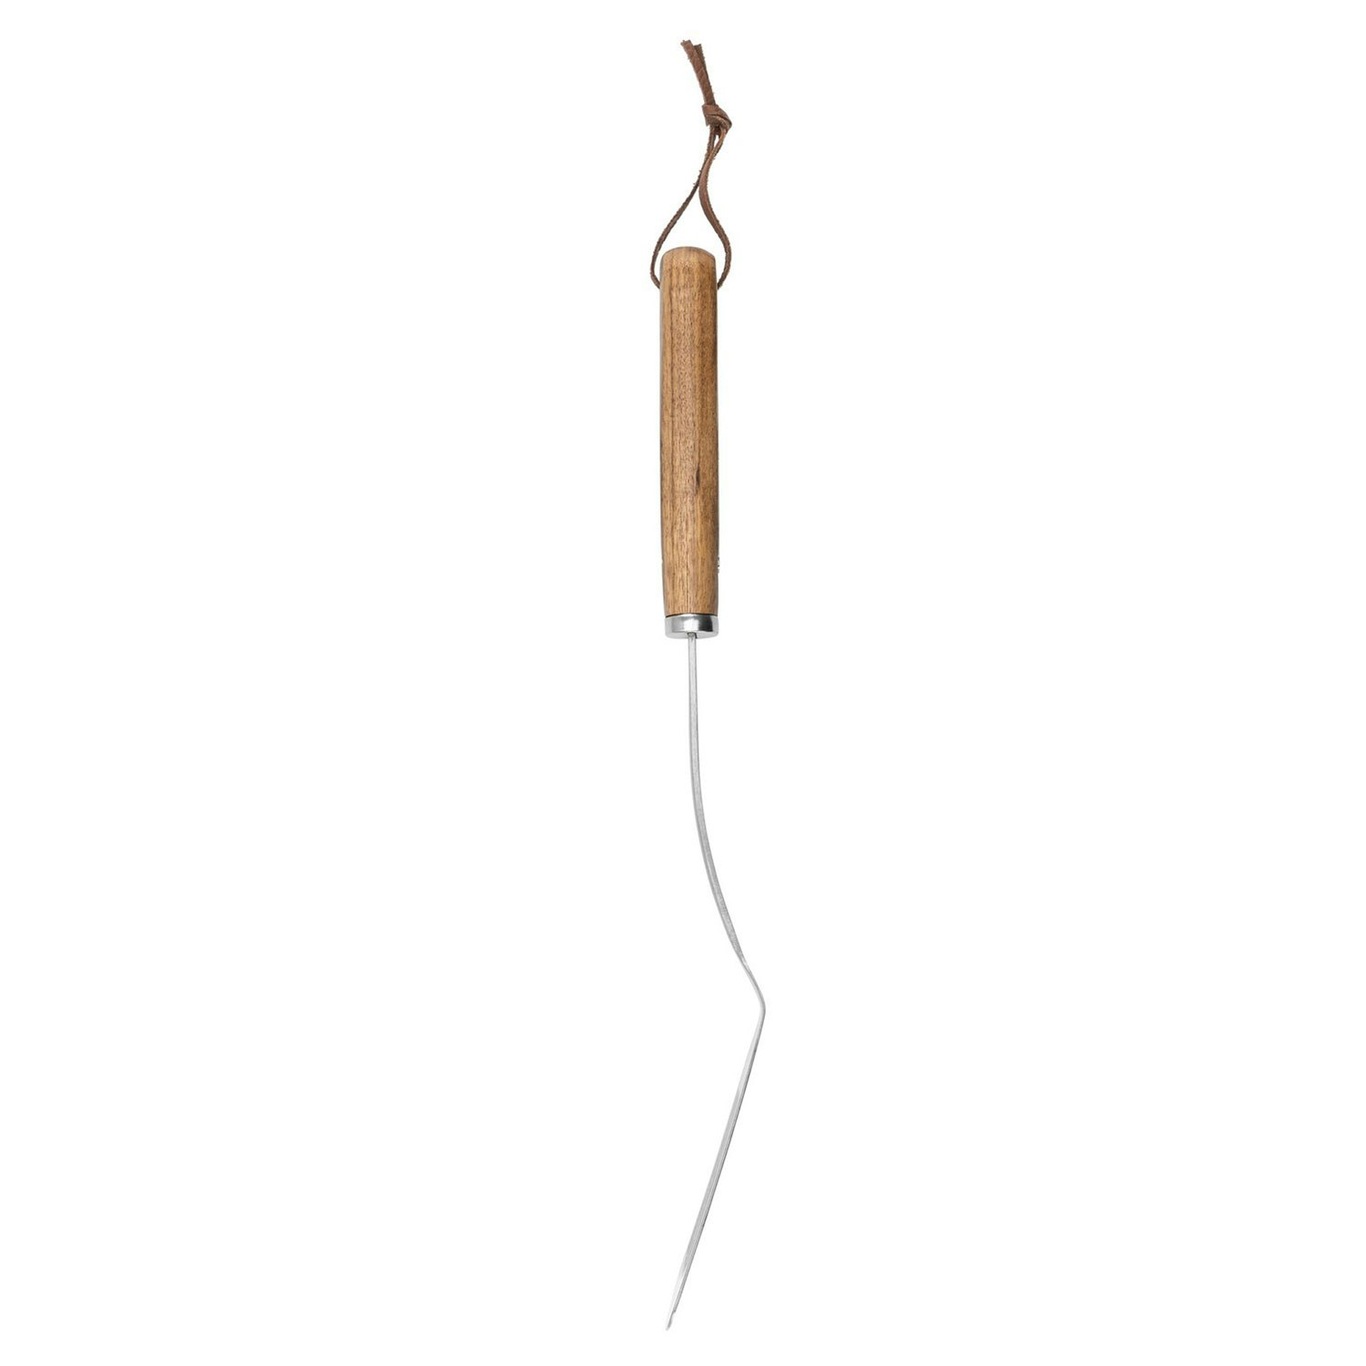 https://royaldesign.com/image/2/heirol-stainless-steel-spatula-beech-wood-7?w=800&quality=80